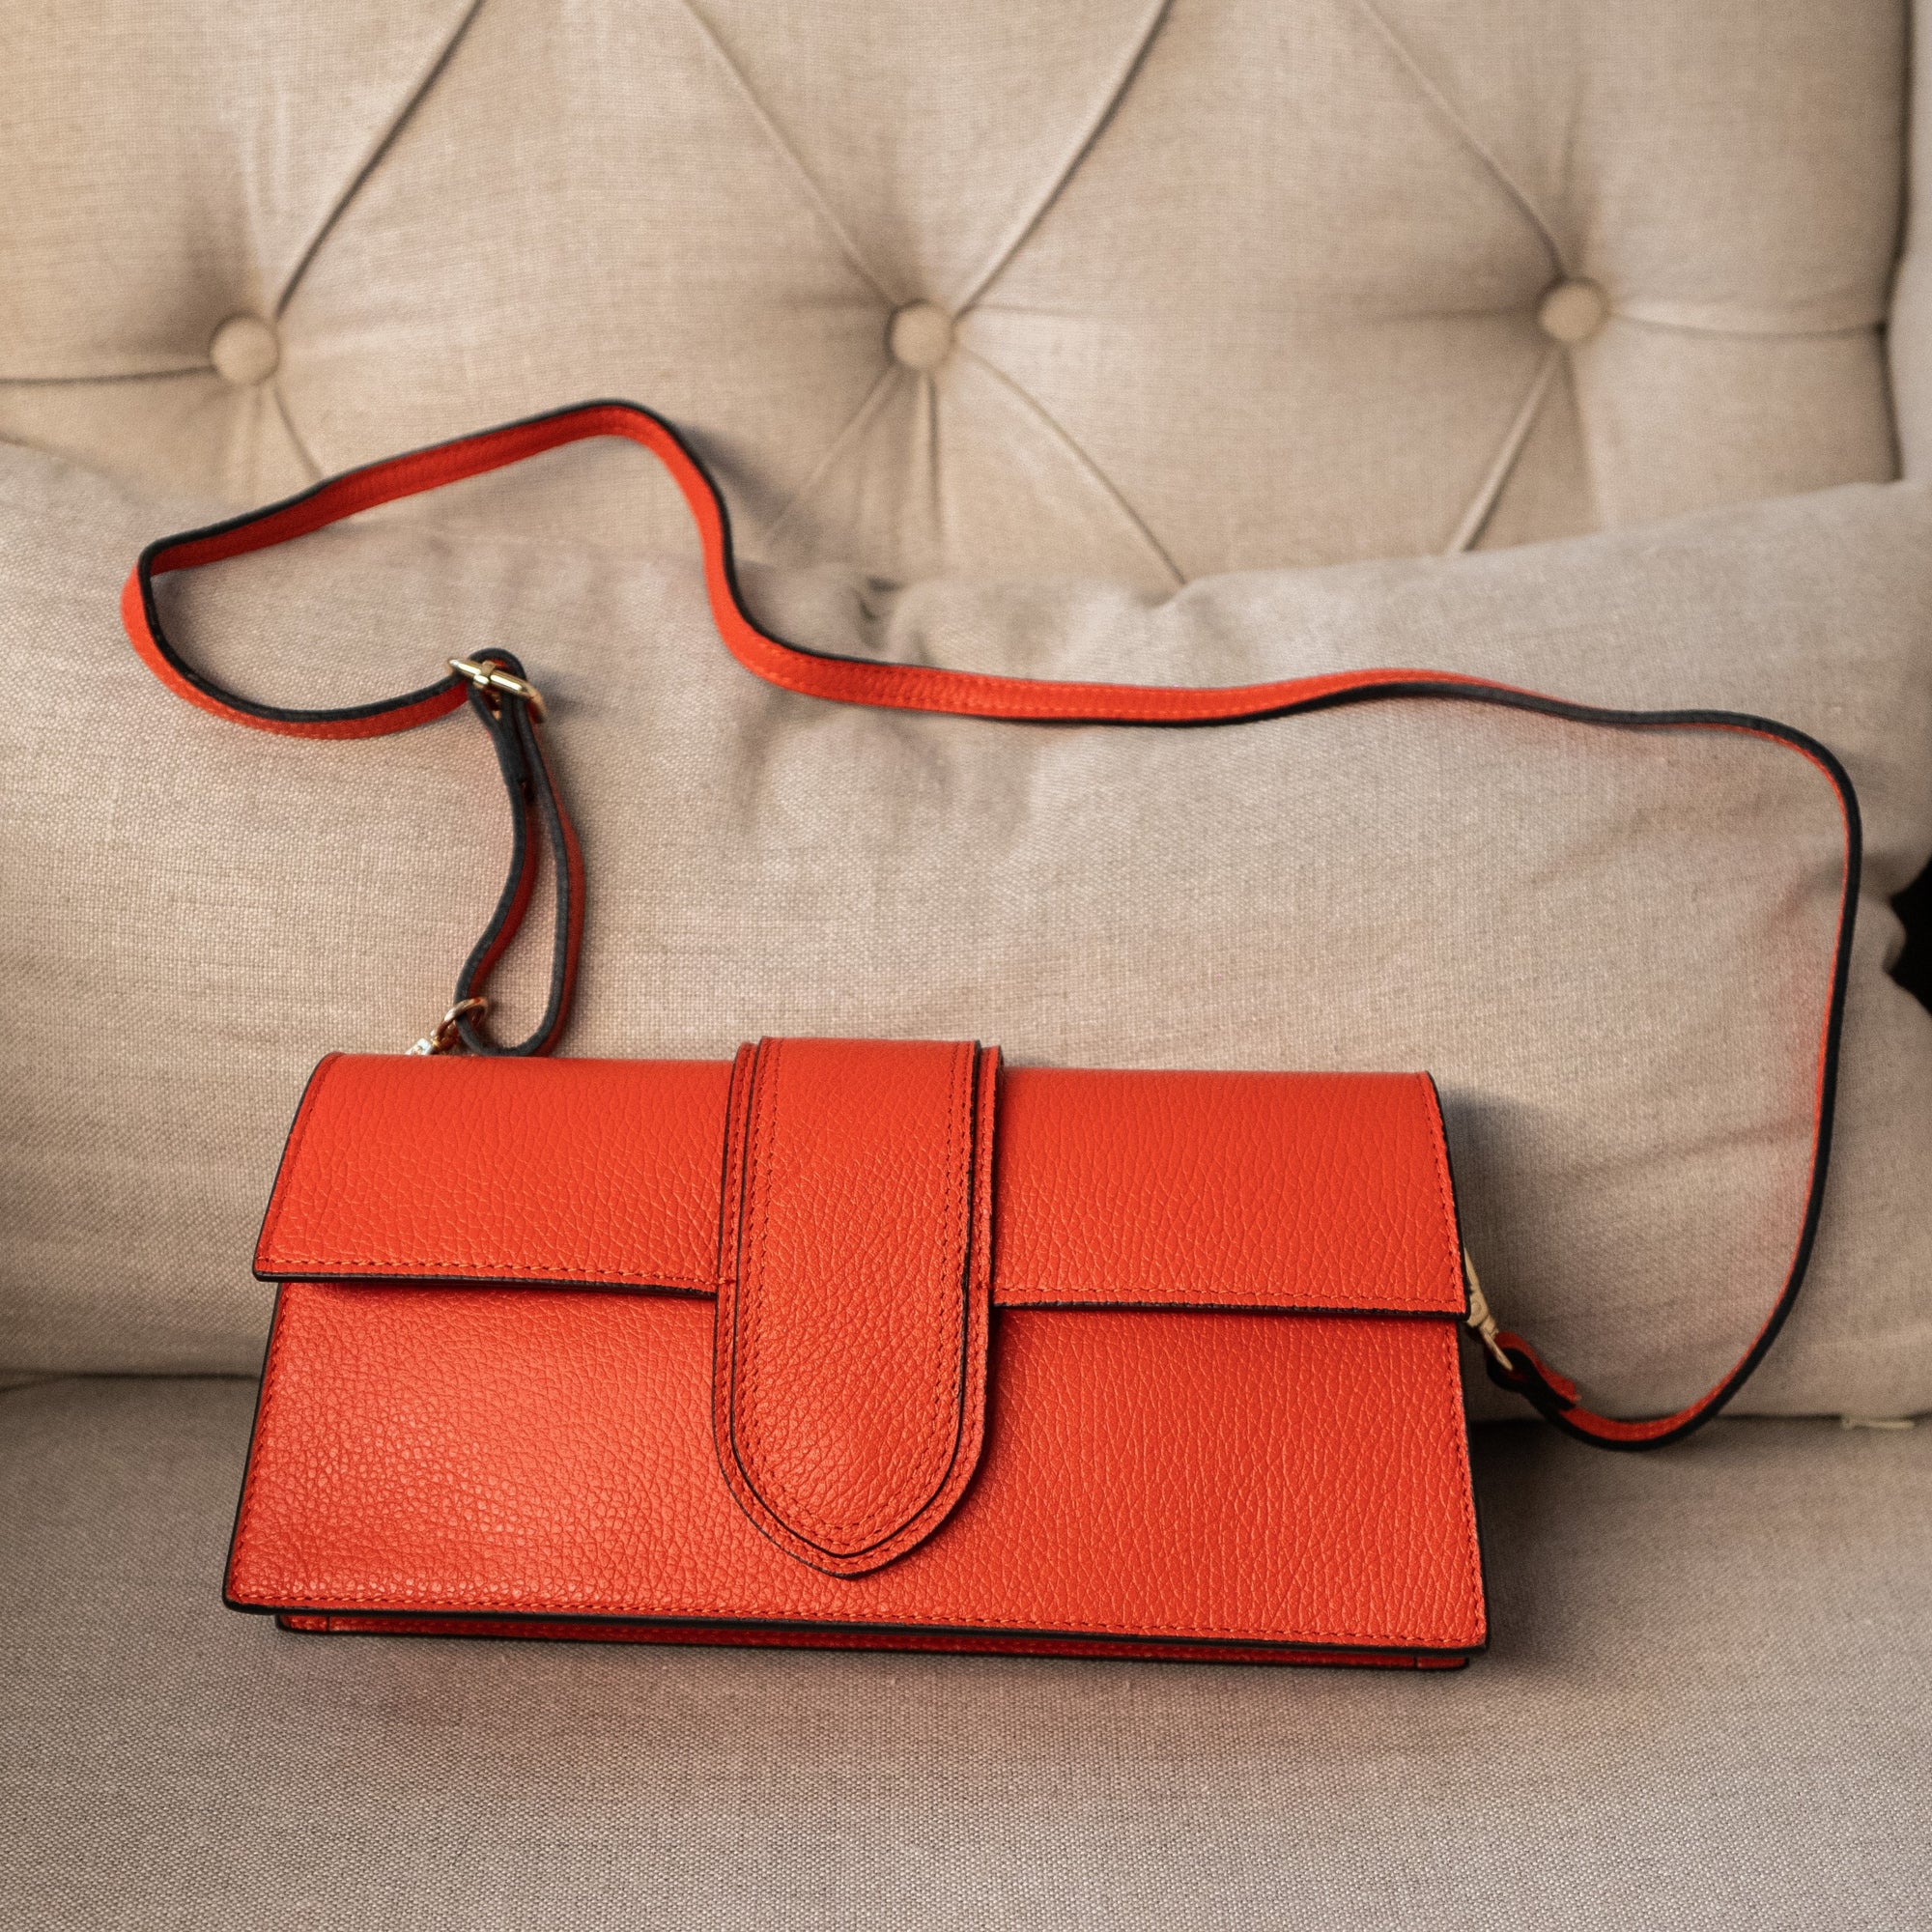 Beauty orange leather handbag